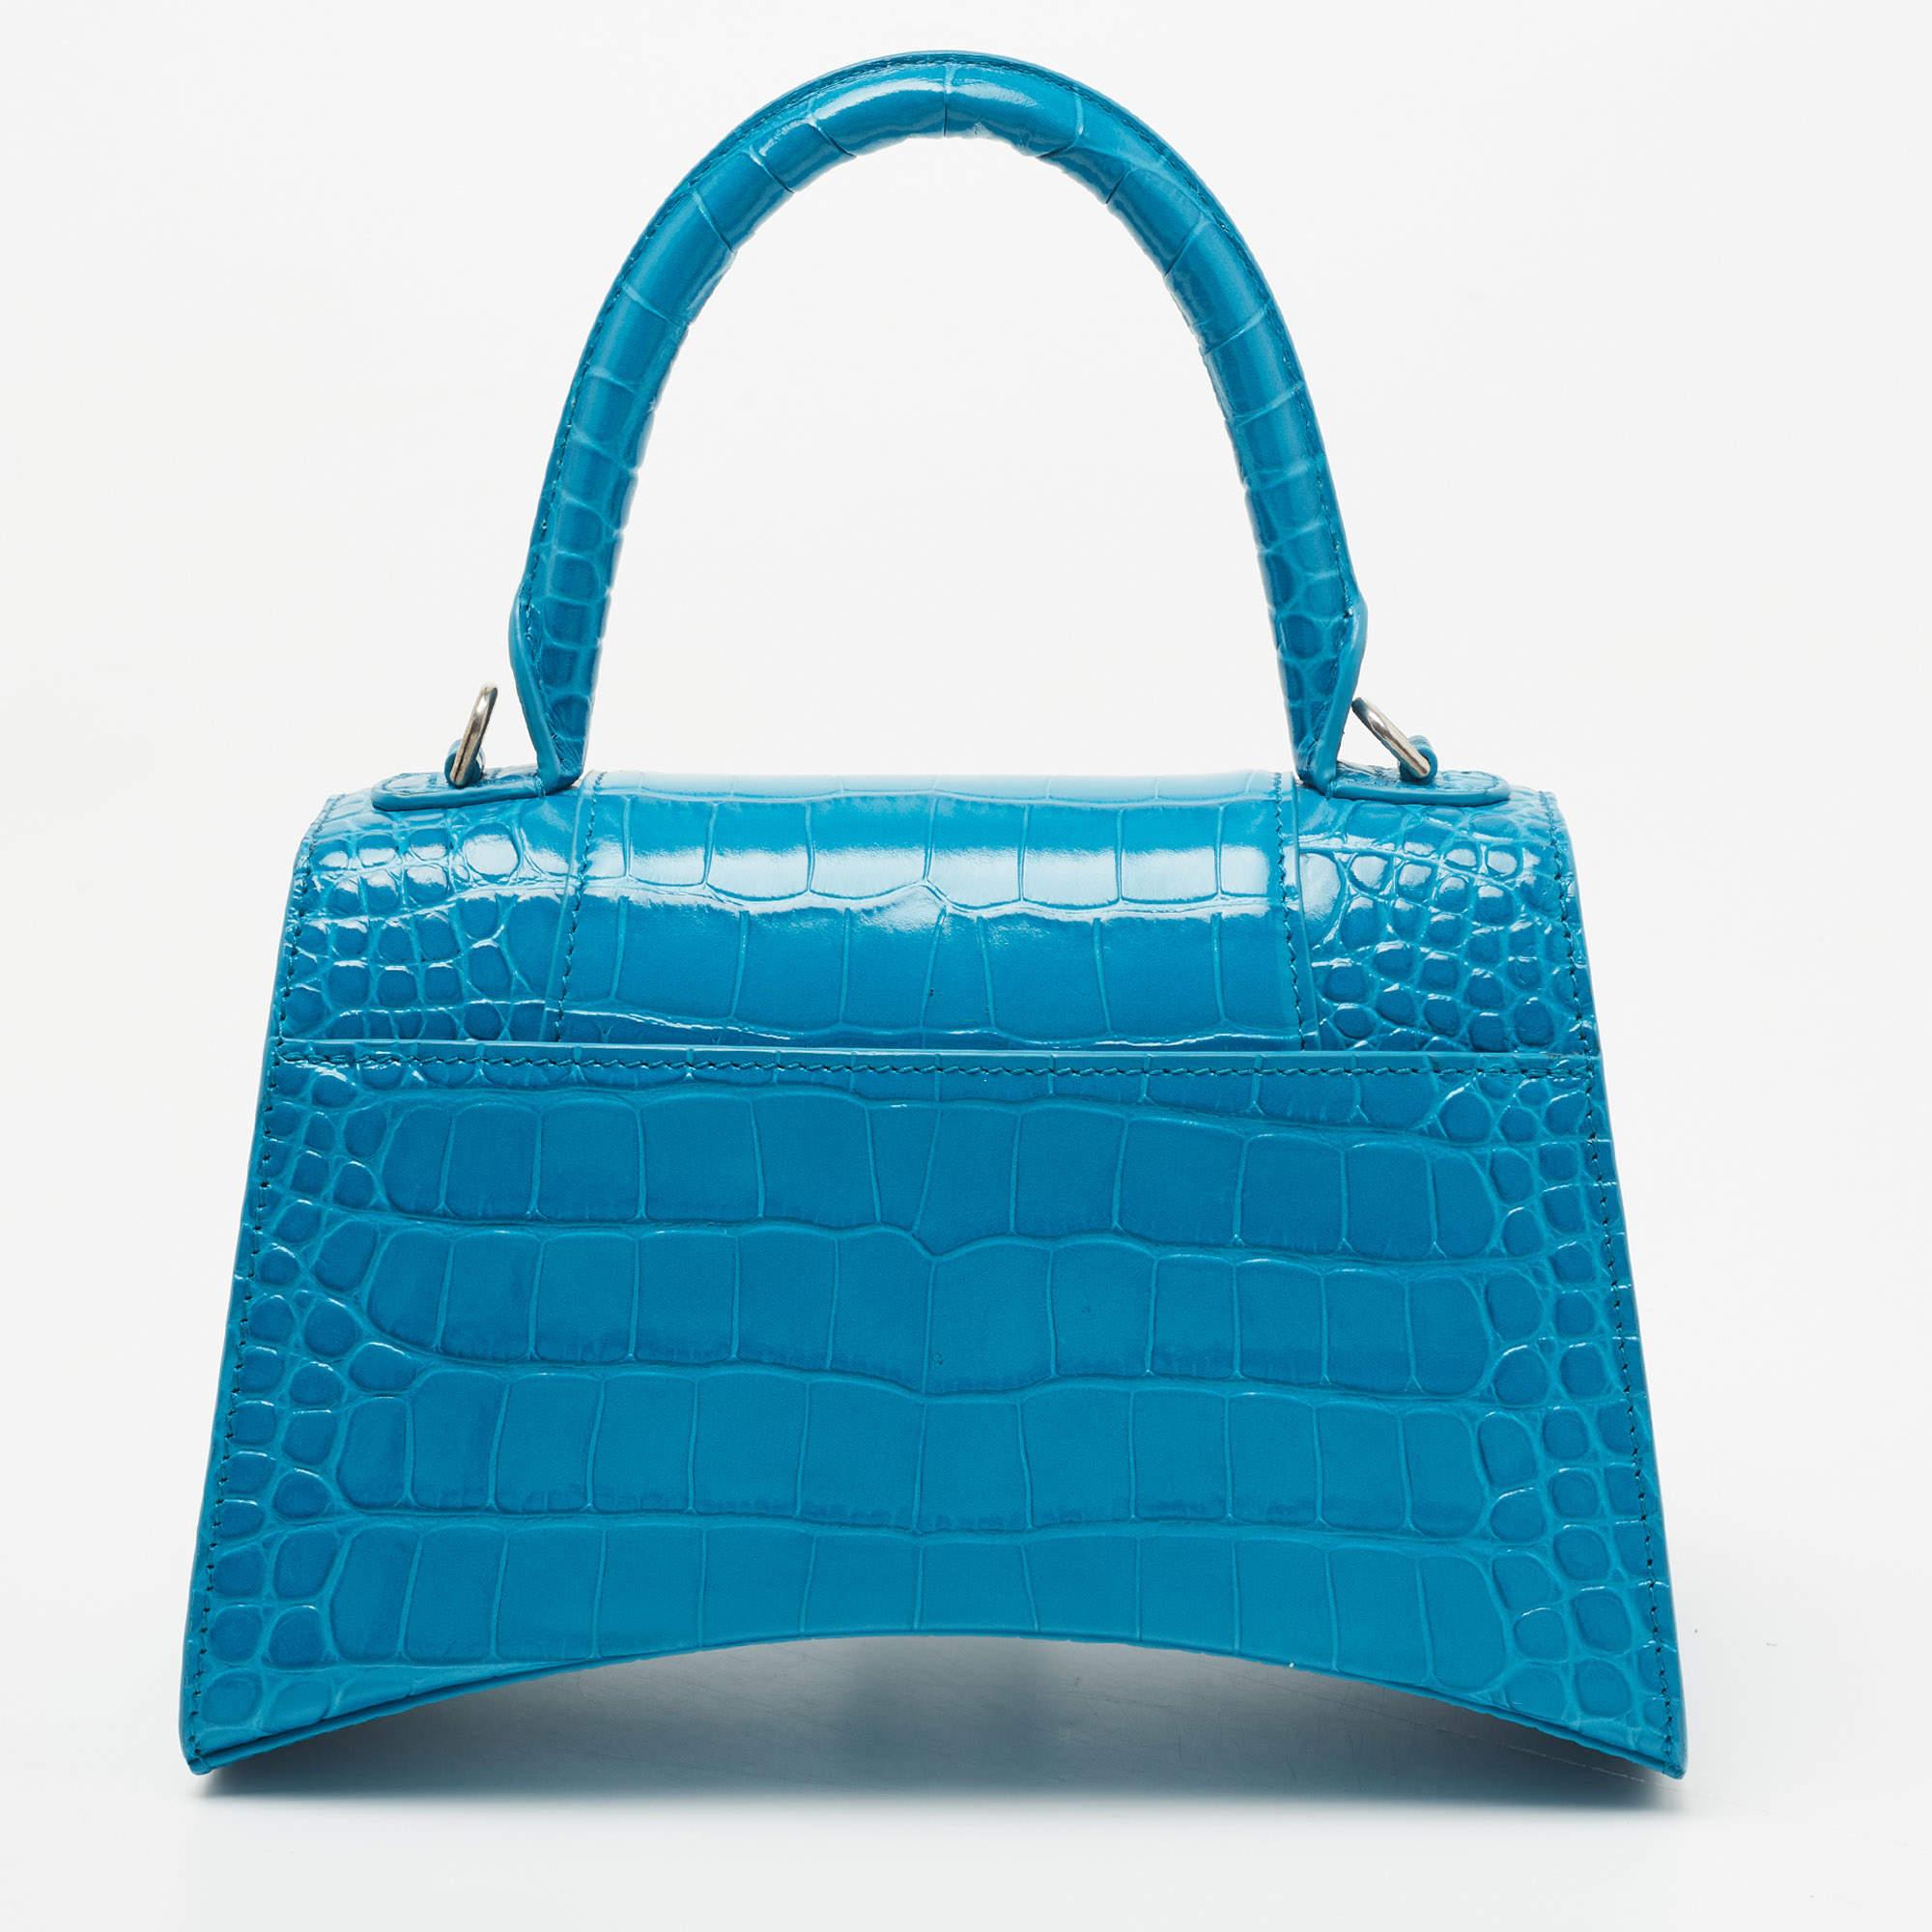 Balenciaga Blue Croc Embossed Leather Hourglass Top Handle Bag 1